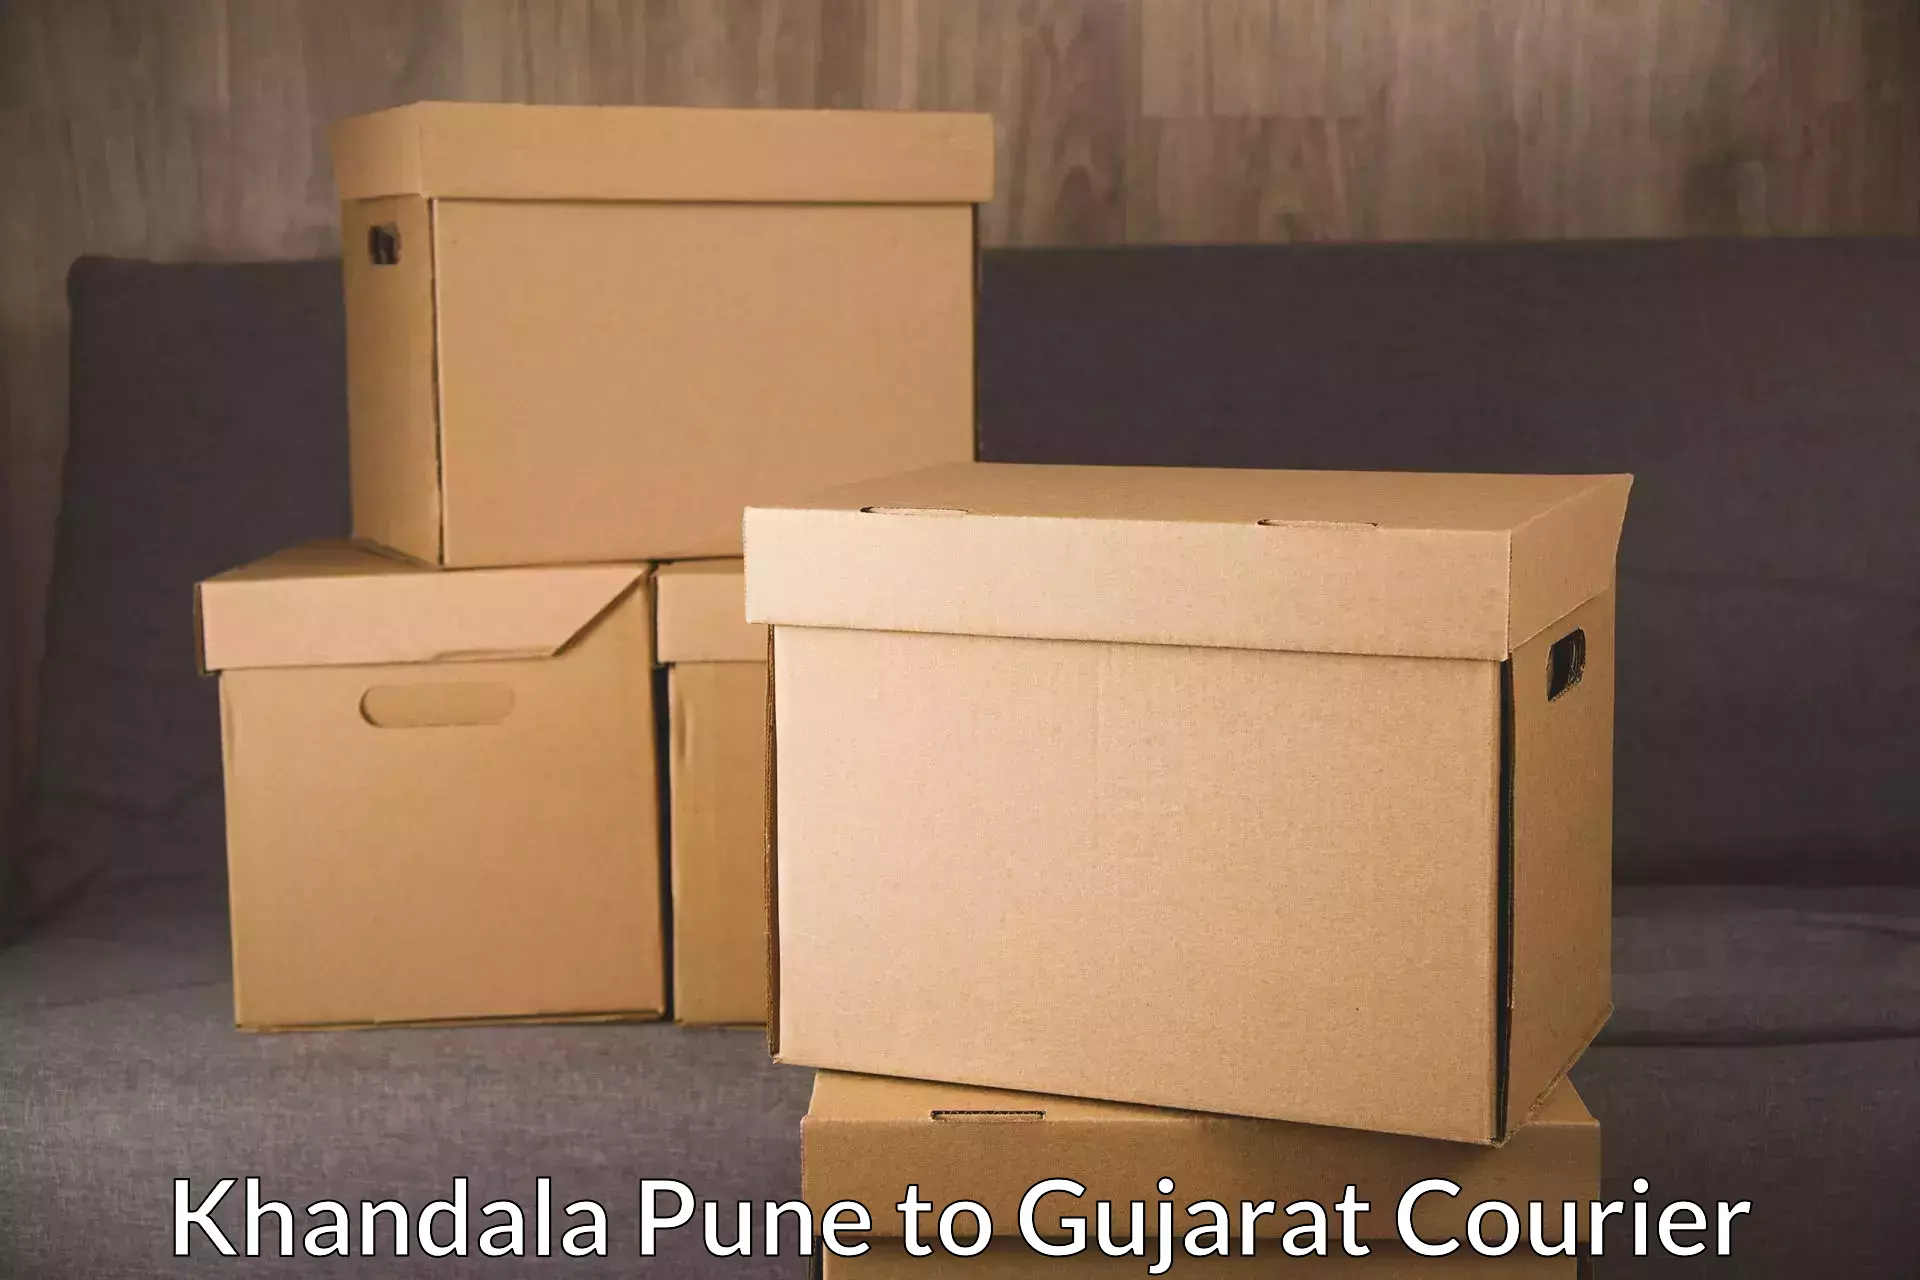 Next-generation courier services Khandala Pune to Gujarat